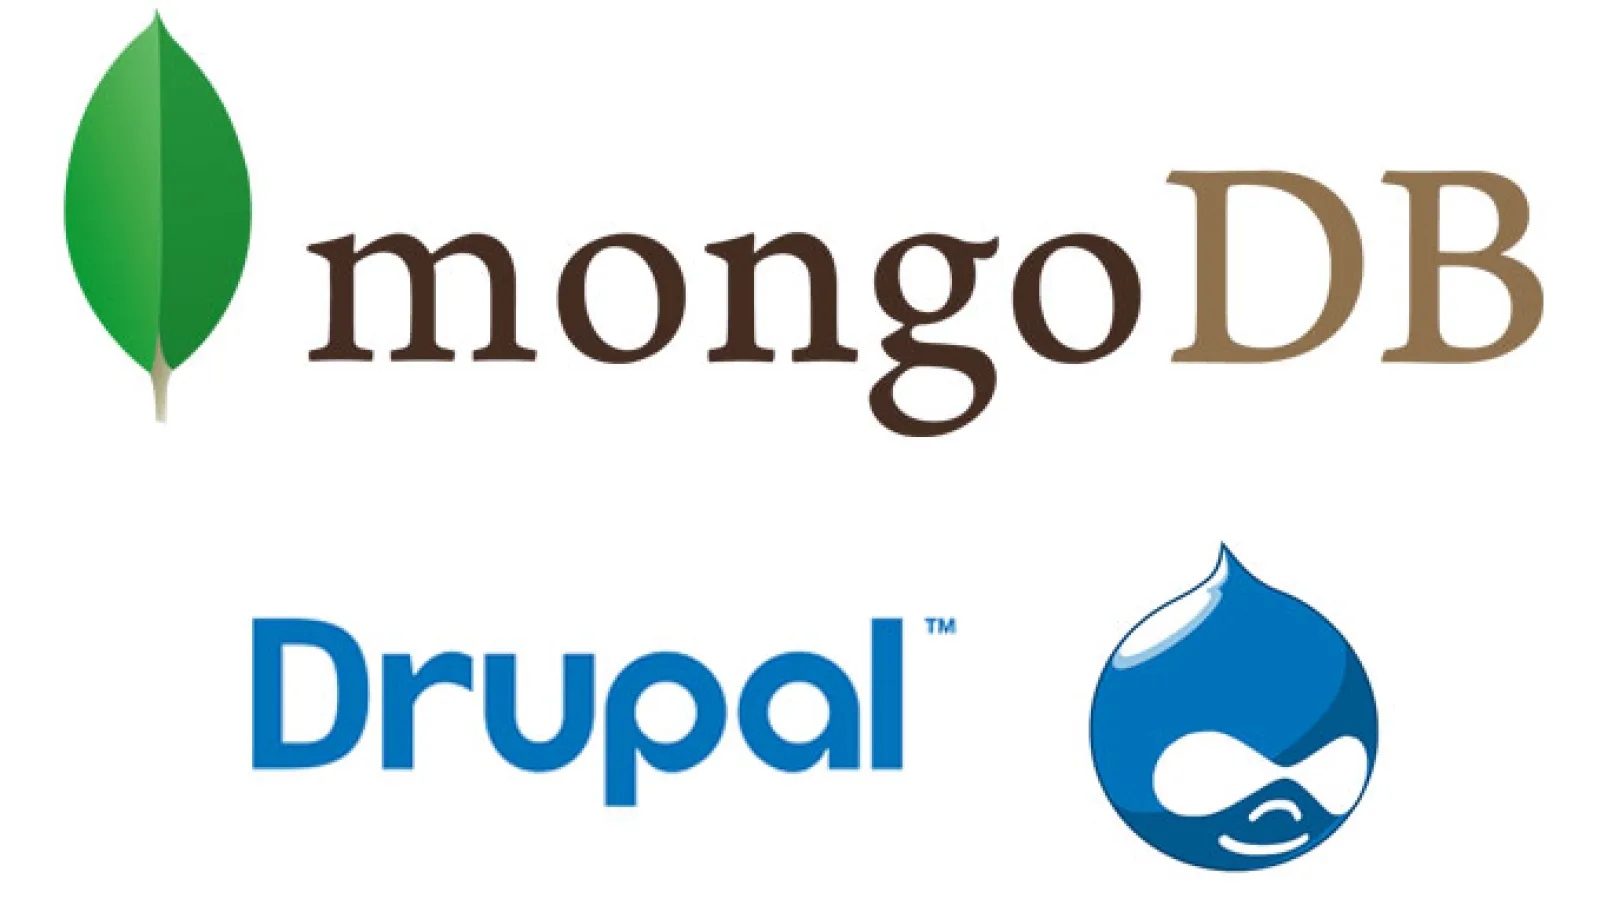 mongodb_drupal_Manage_Dynamic_Web_Content.jpg